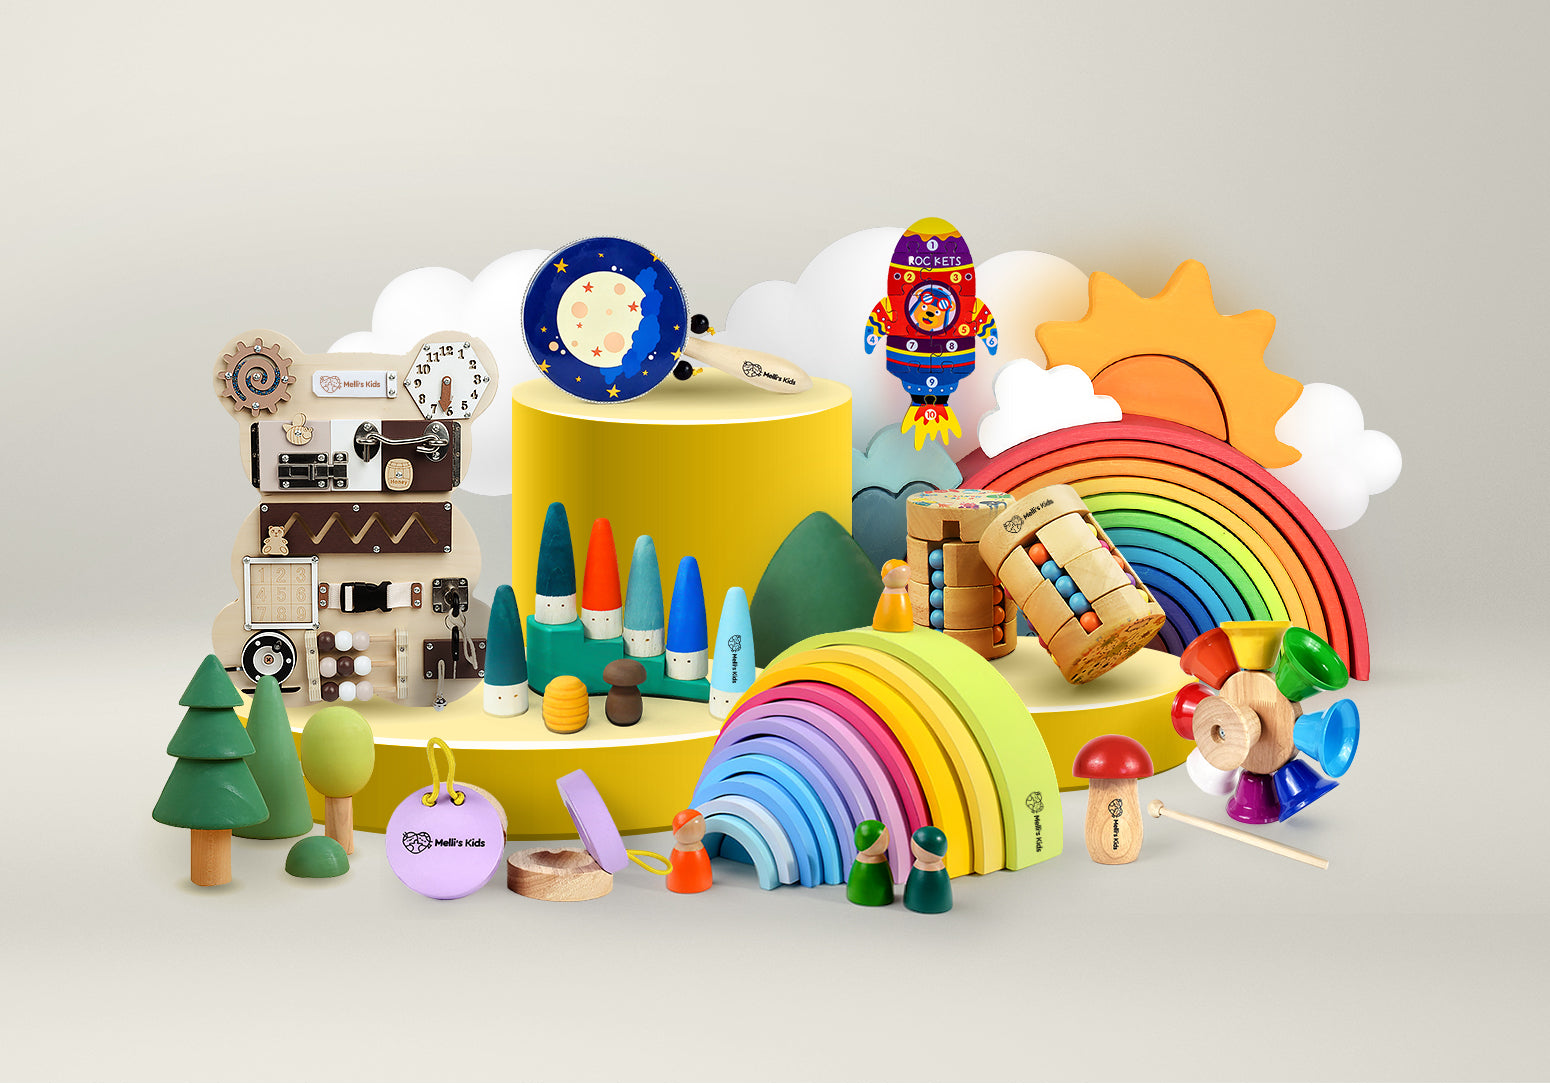 Melli's Kids - Online wooden toy store